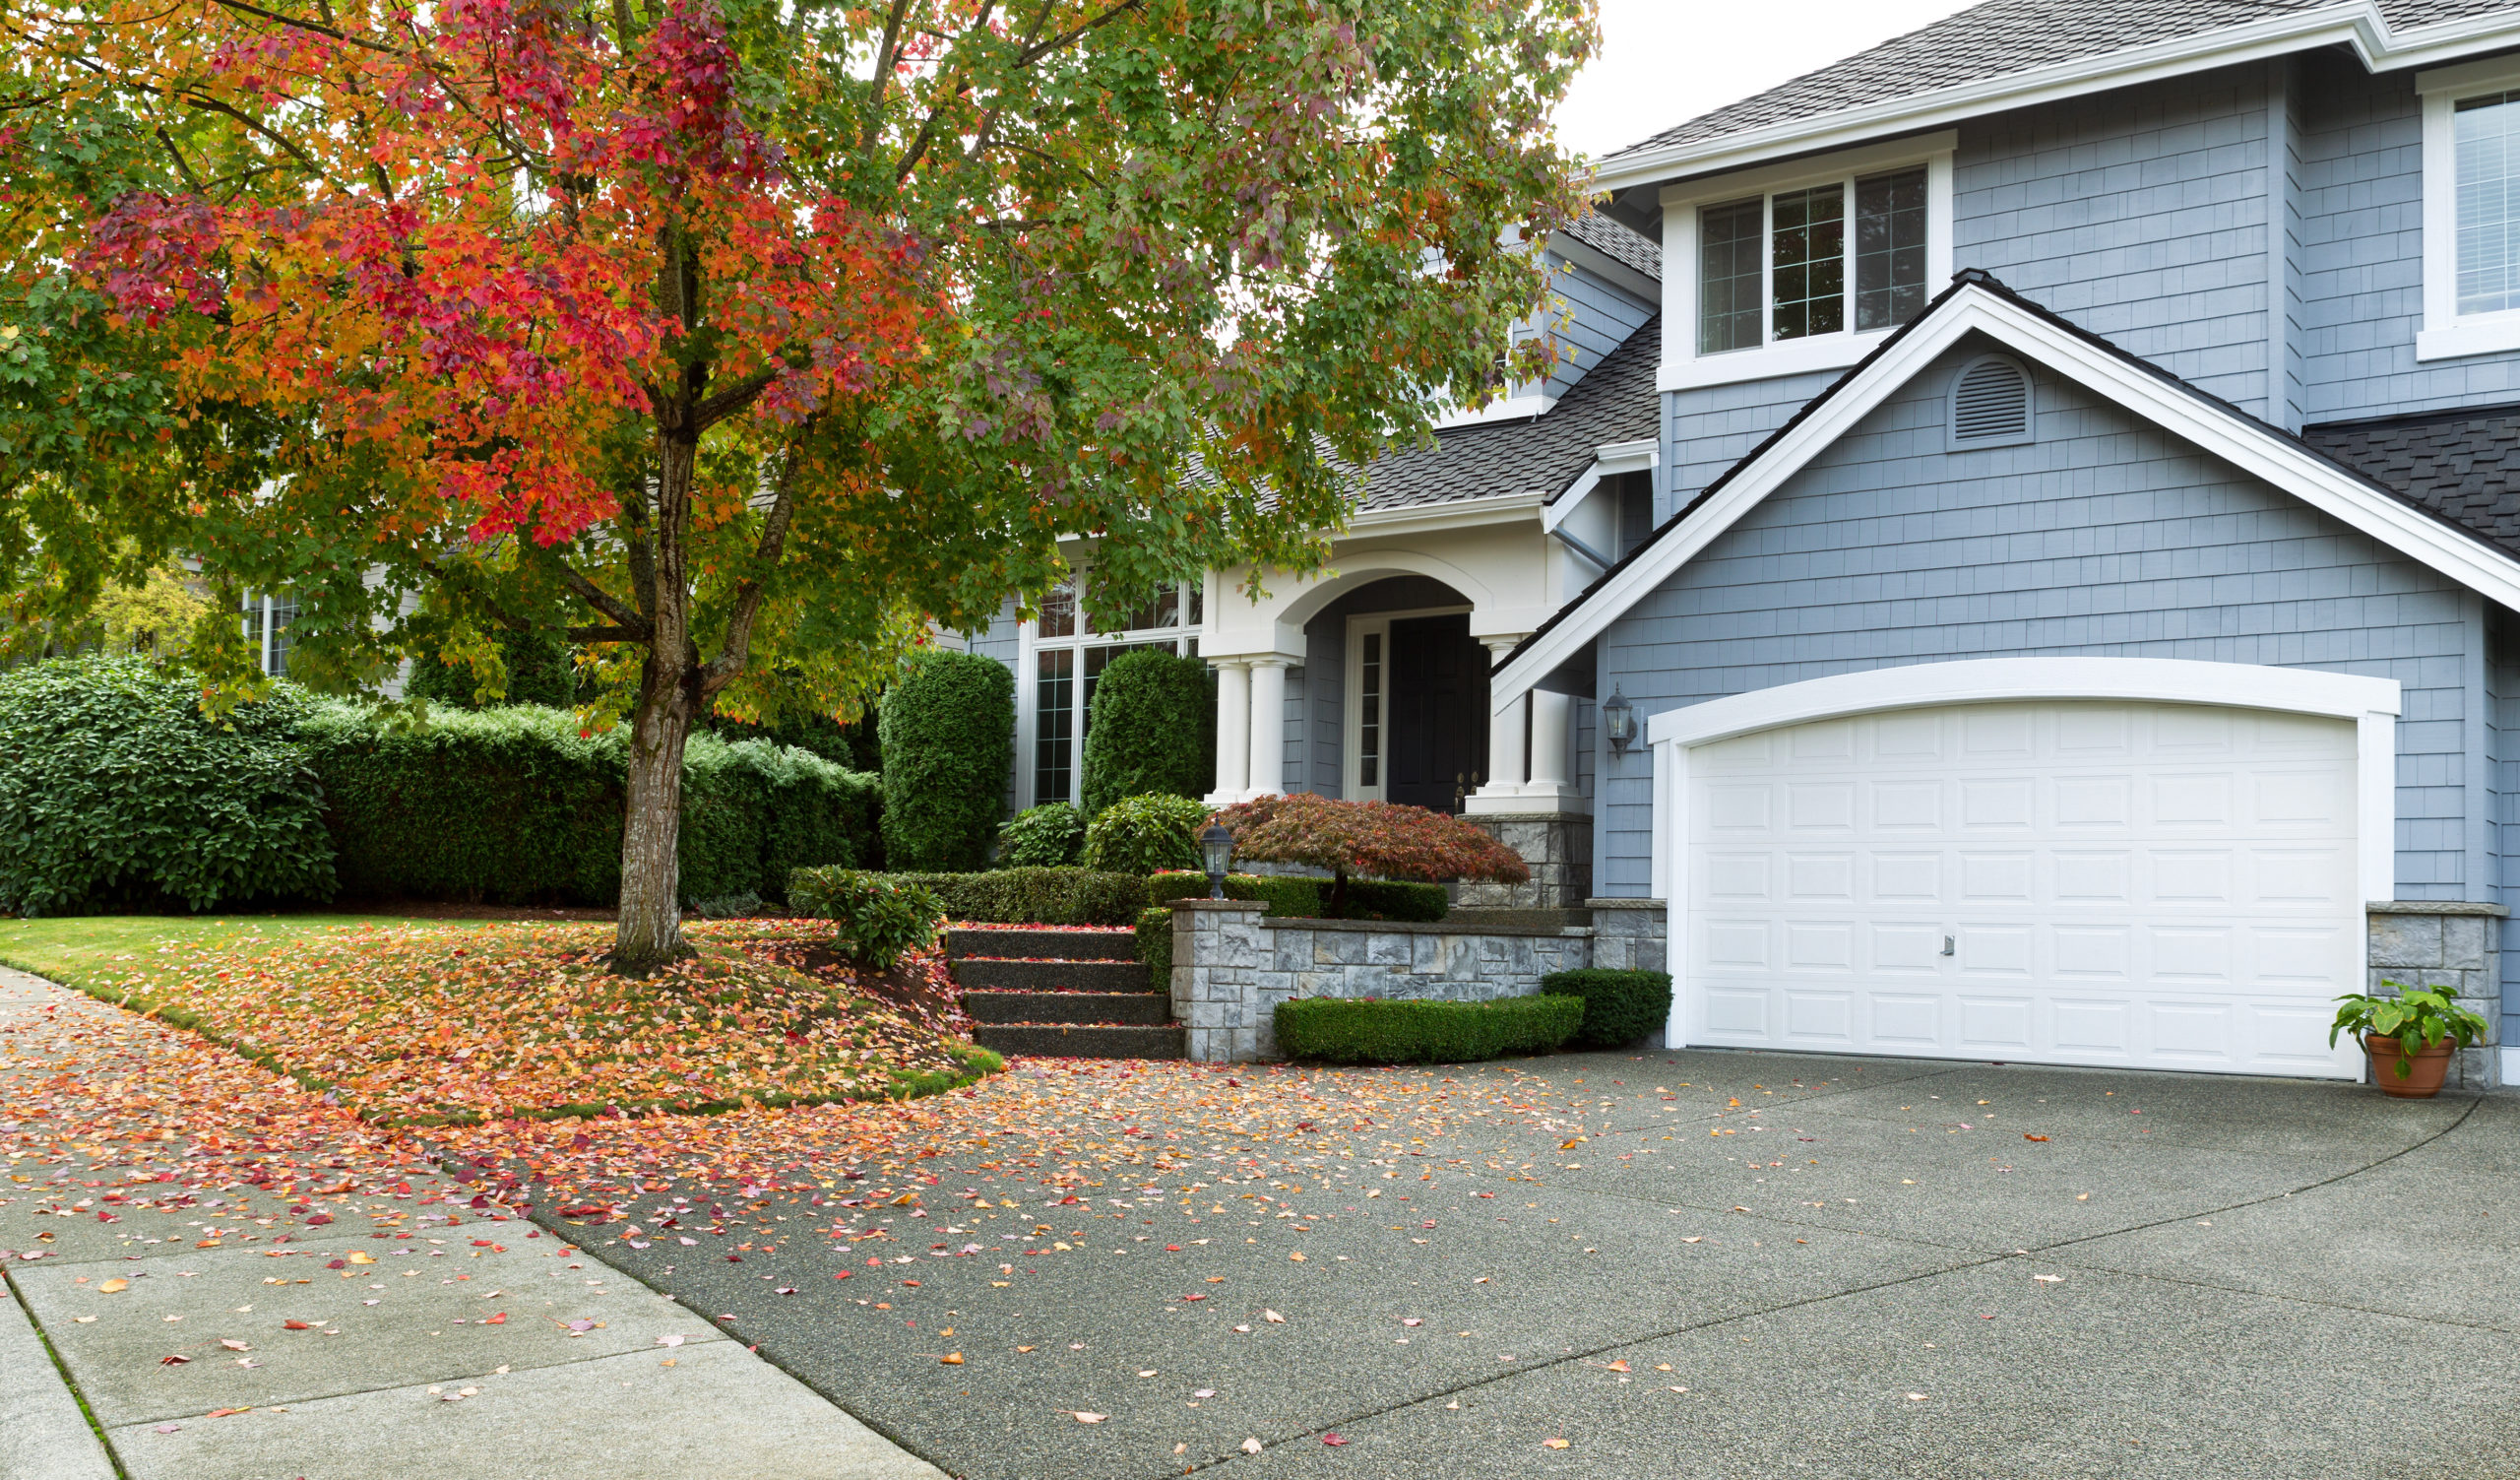 Fall Home Maintenance Checklist